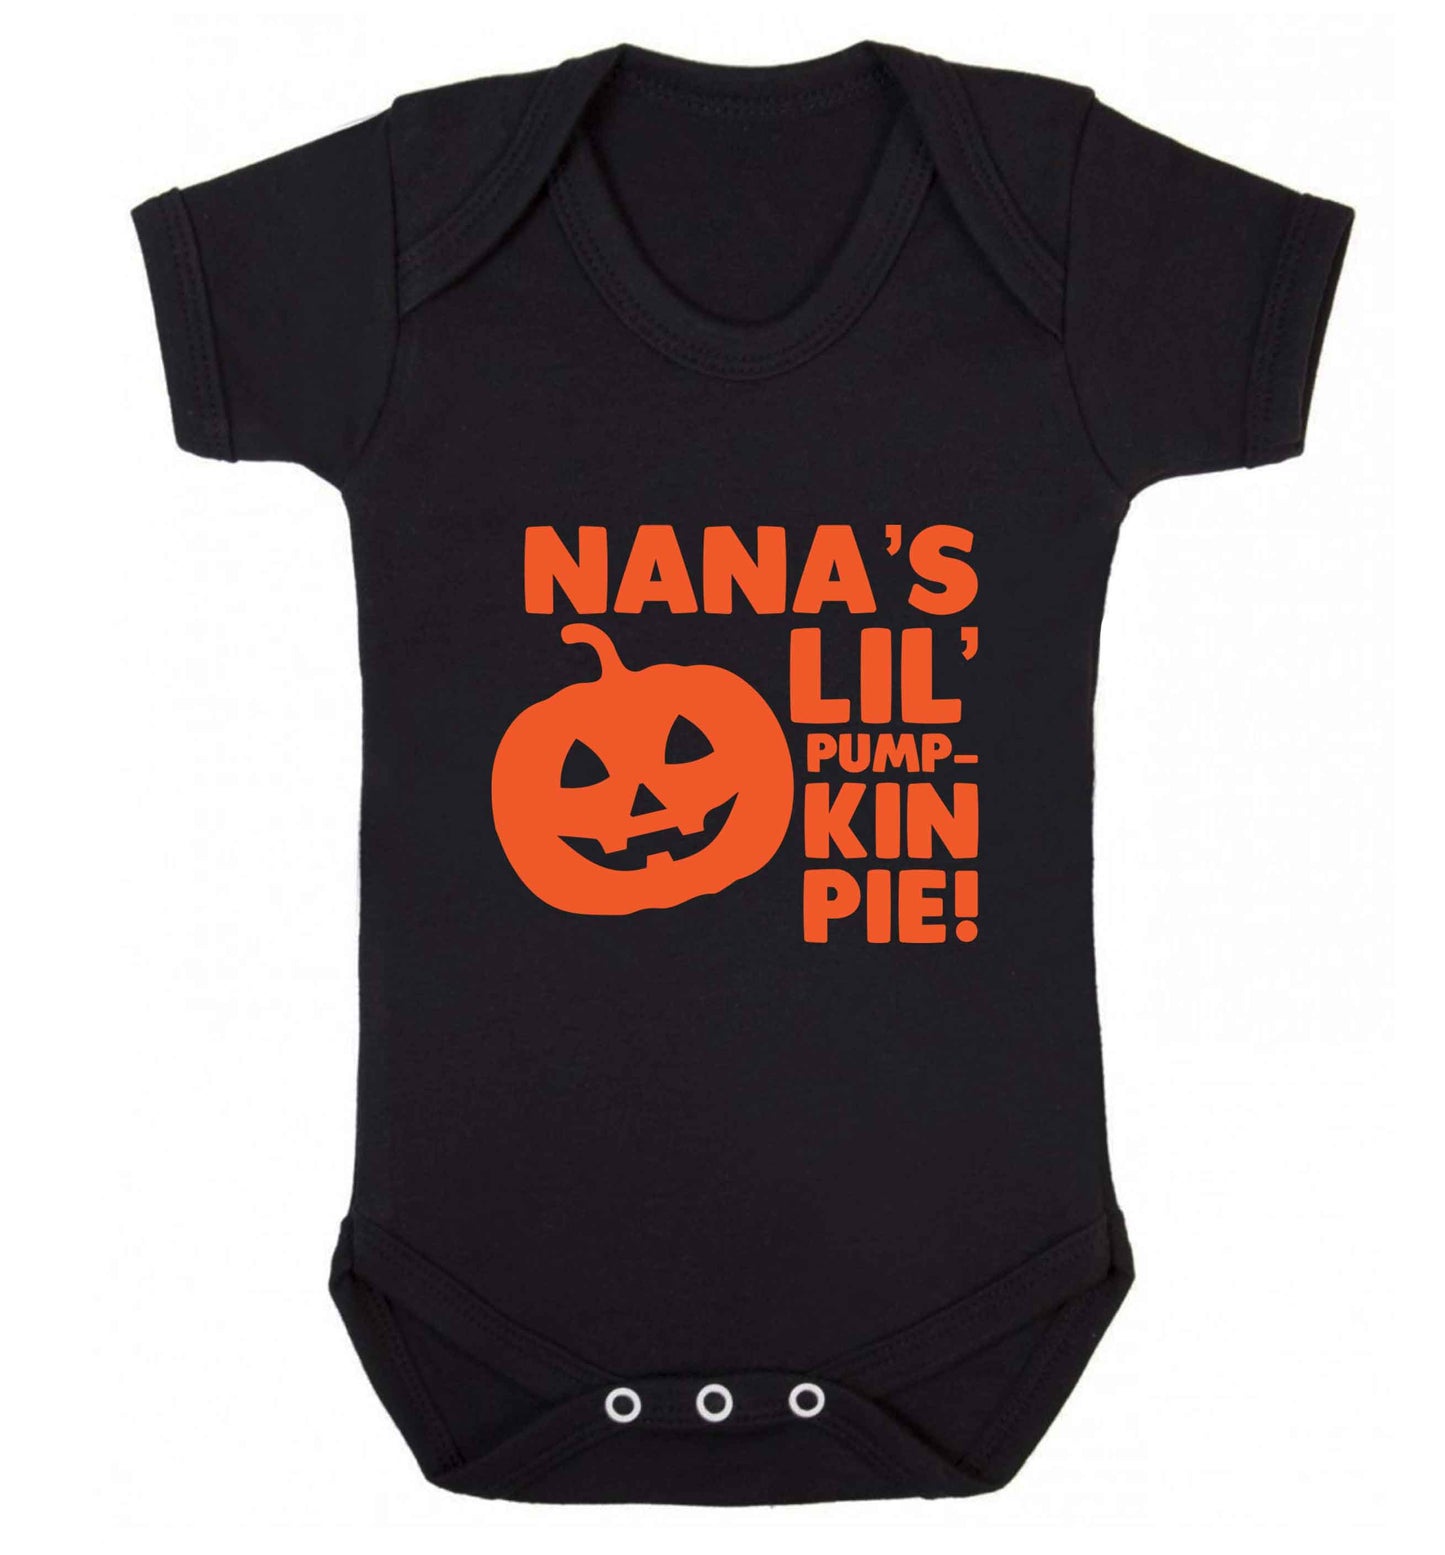 Nana's lil' pumpkin pie baby vest black 18-24 months